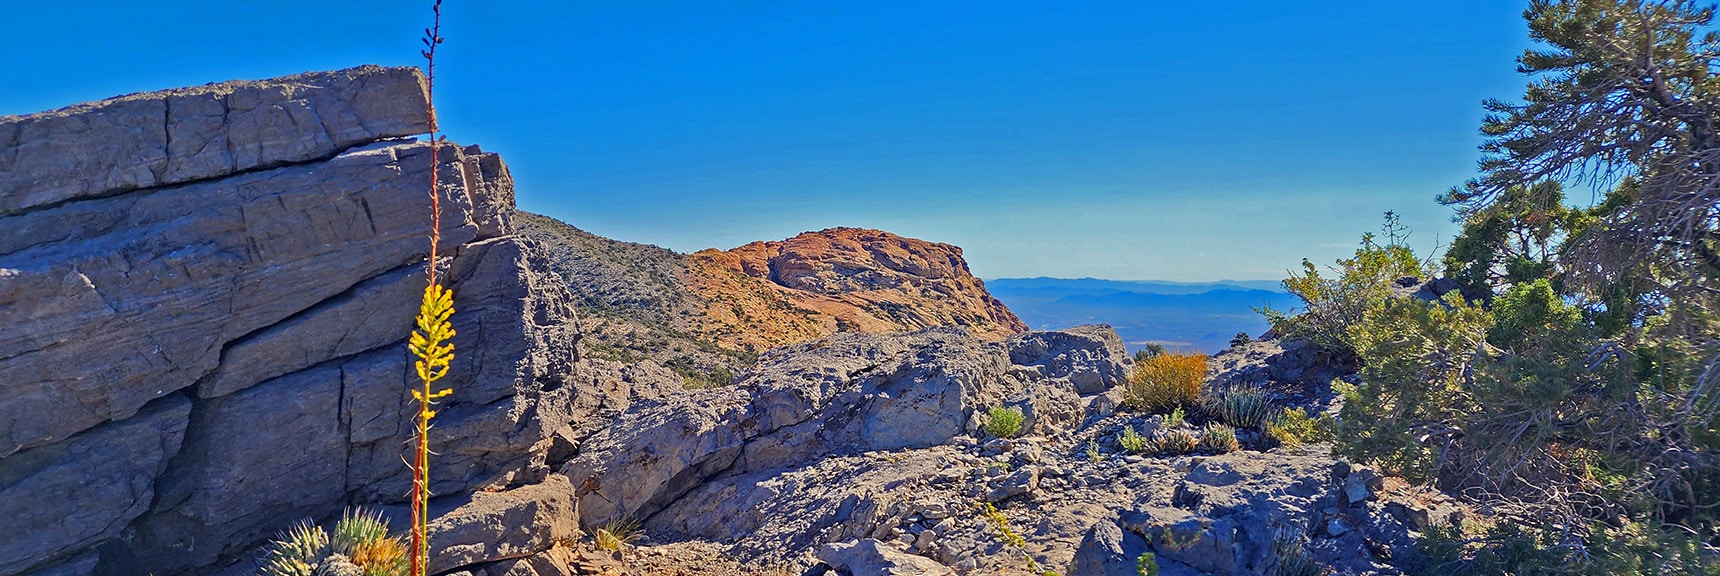 Topping the Ridgeline, Windy Peak Appears. | Hollow Rock Peak | Rainbow Mountain Wilderness, Nevada